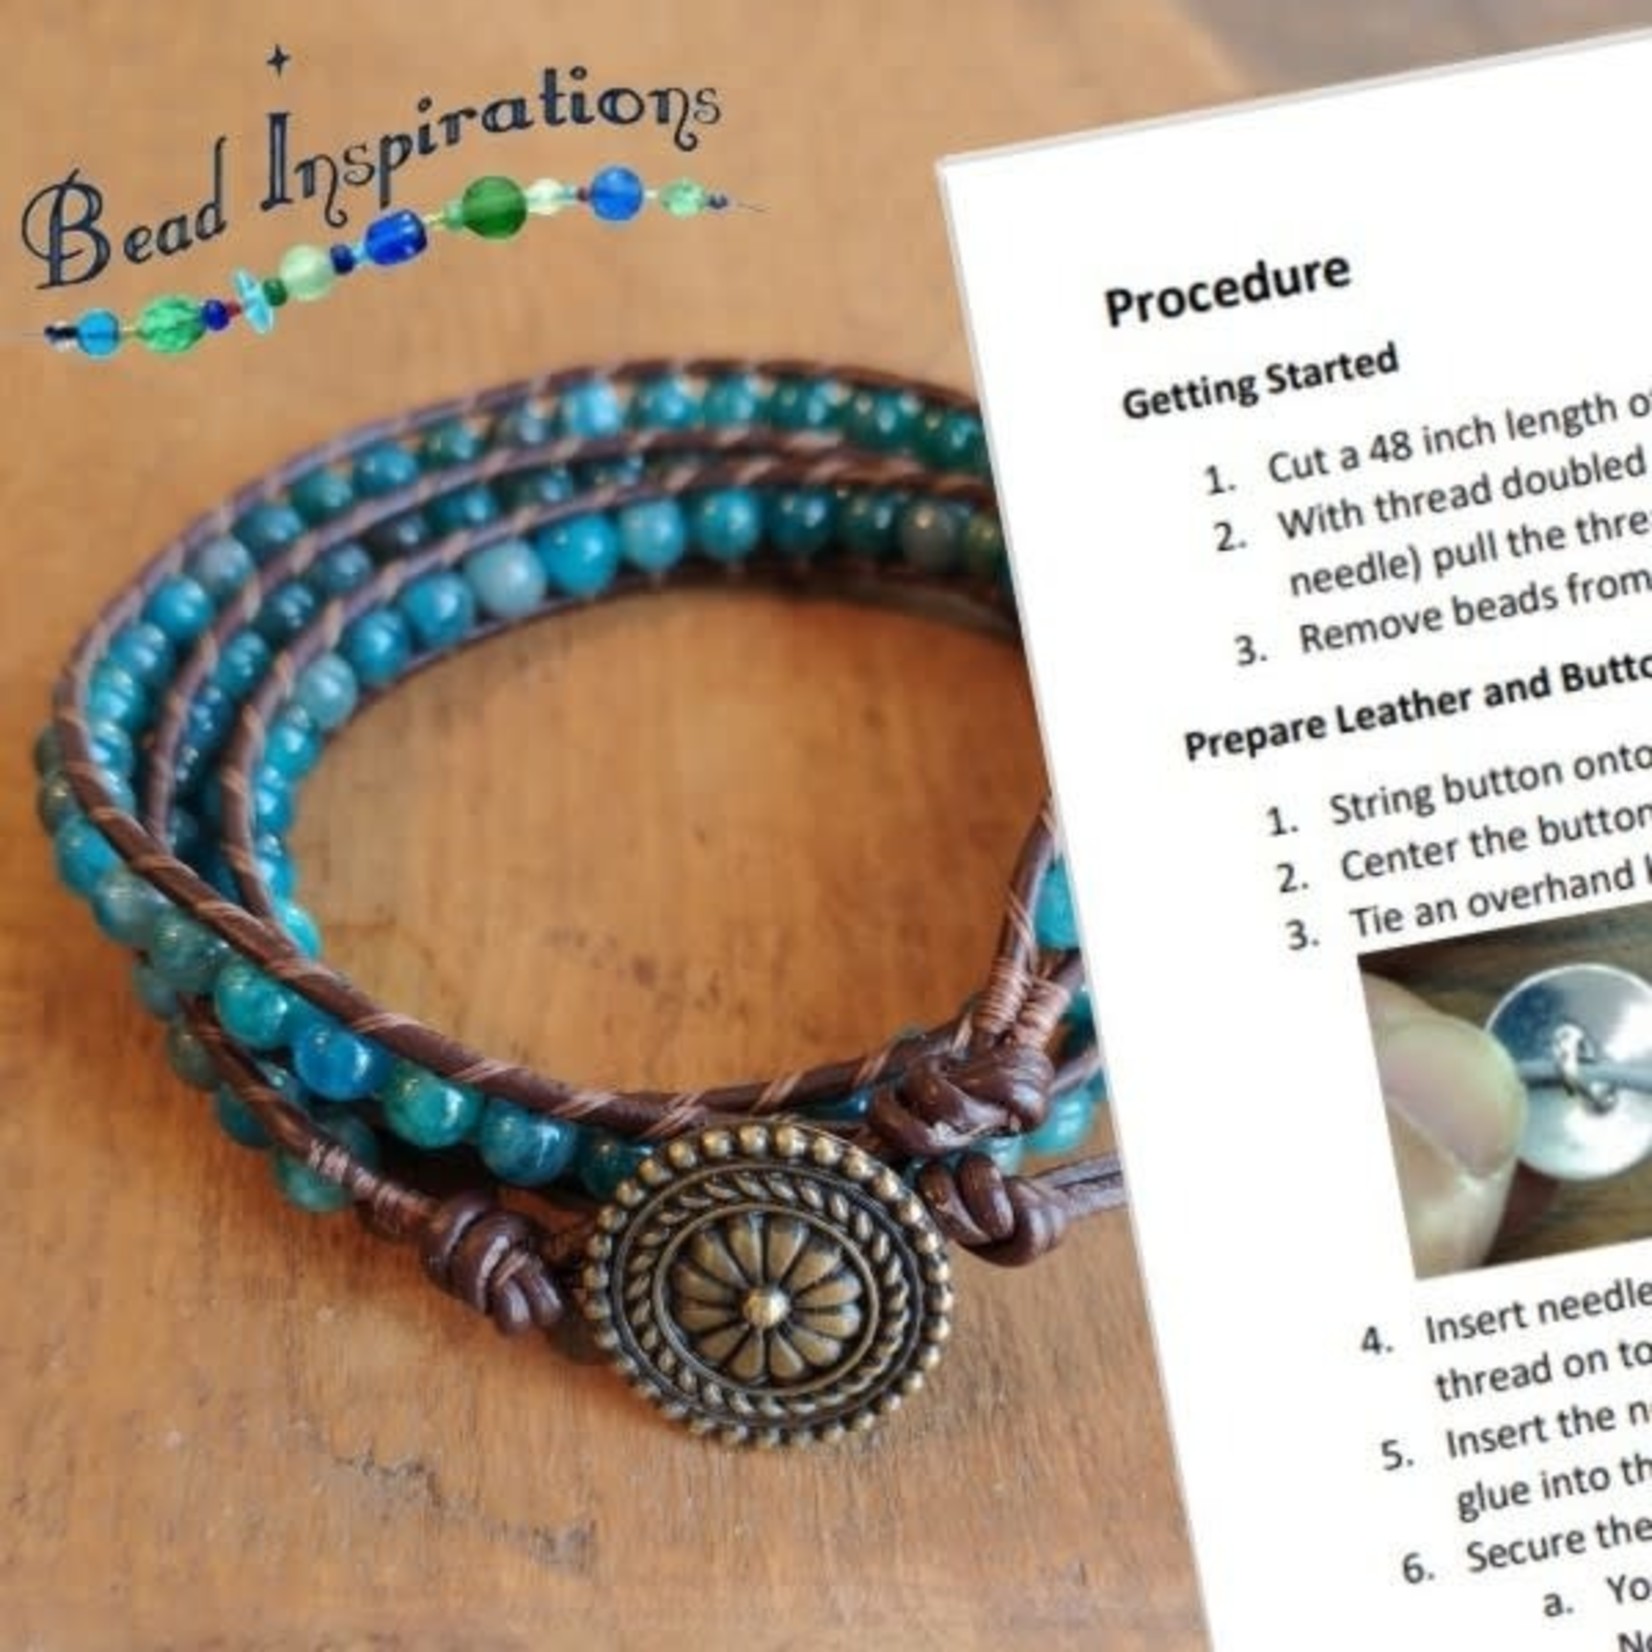 Printed Instructions to Make a Basic Wrap Bracelet